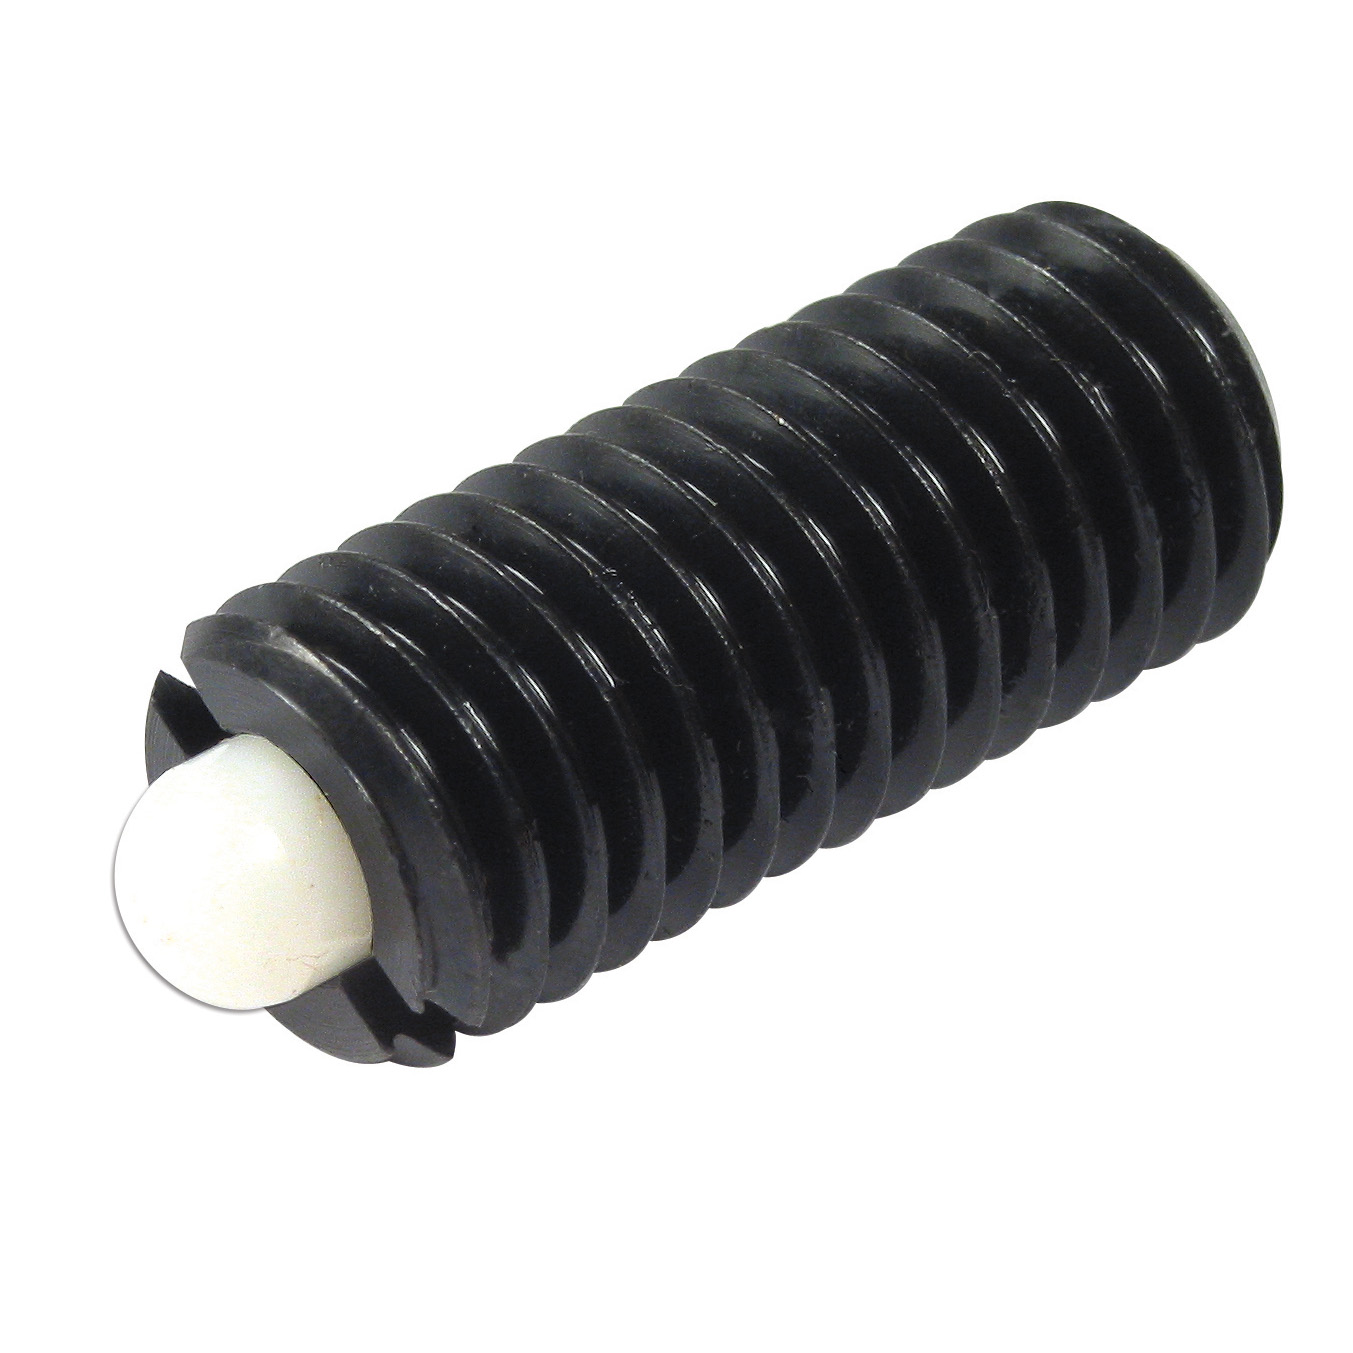 Spring plunger with internal hexagonal socket - steel body, plastic pin - standard - 